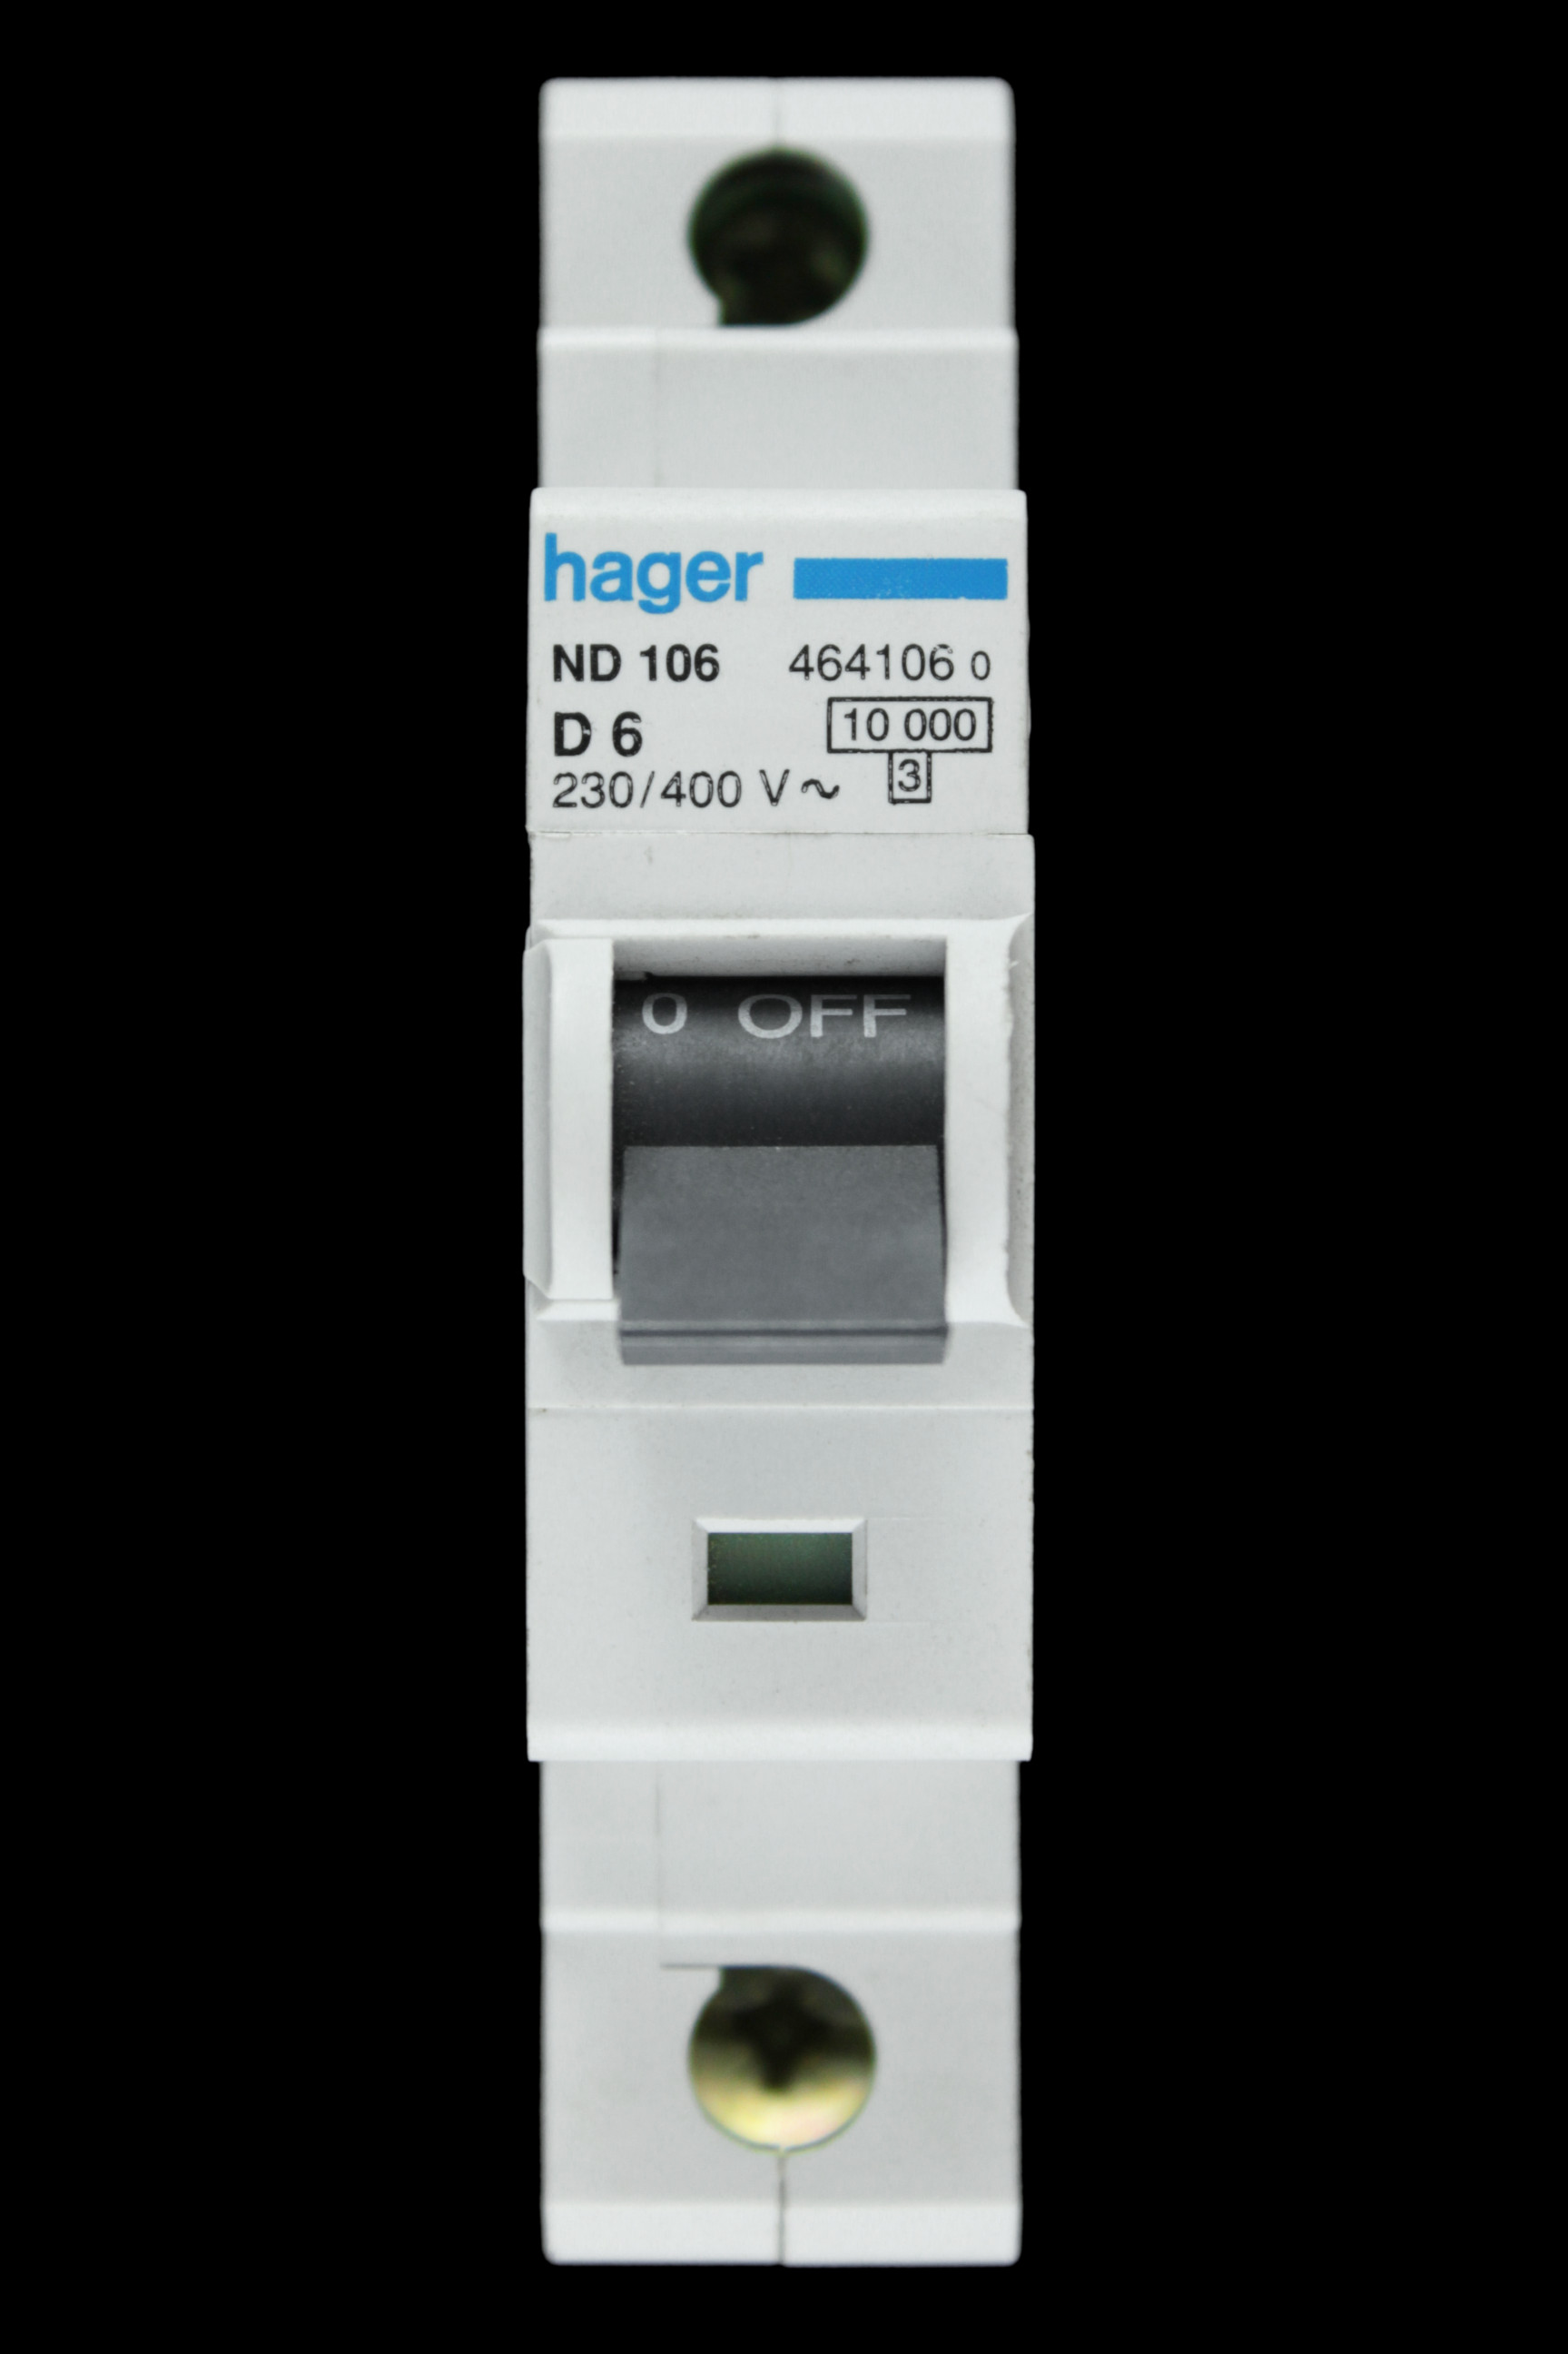 HAGER 6 AMP CURVE D 10kA MCB CIRCUIT BREAKER 464106 ND106